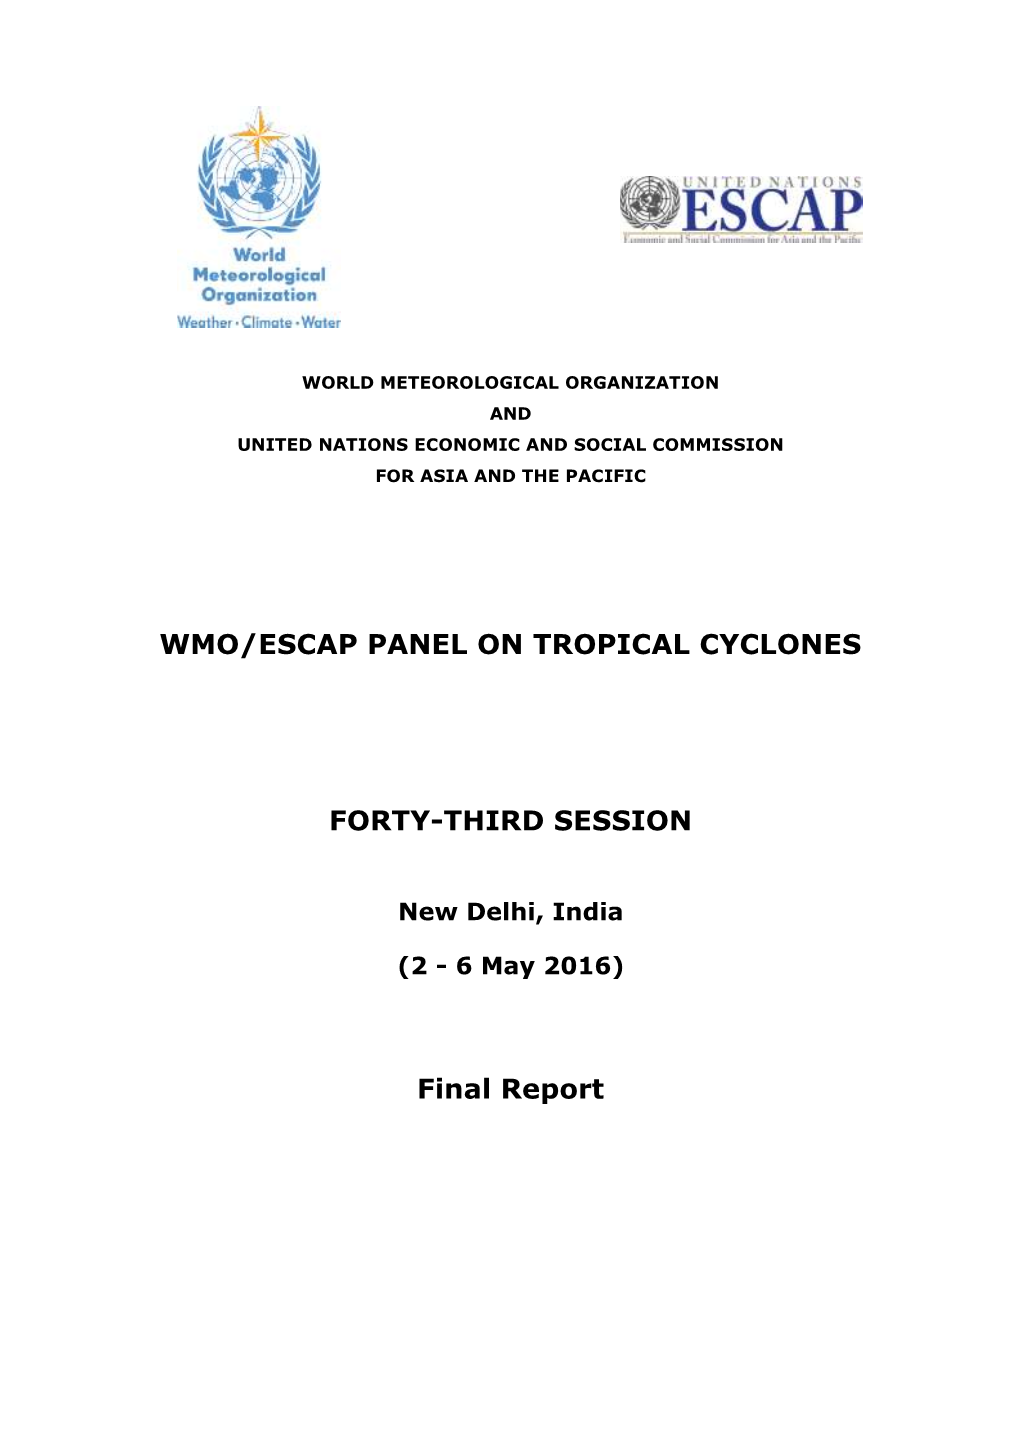 Wmo/Escap Panel on Tropical Cyclones